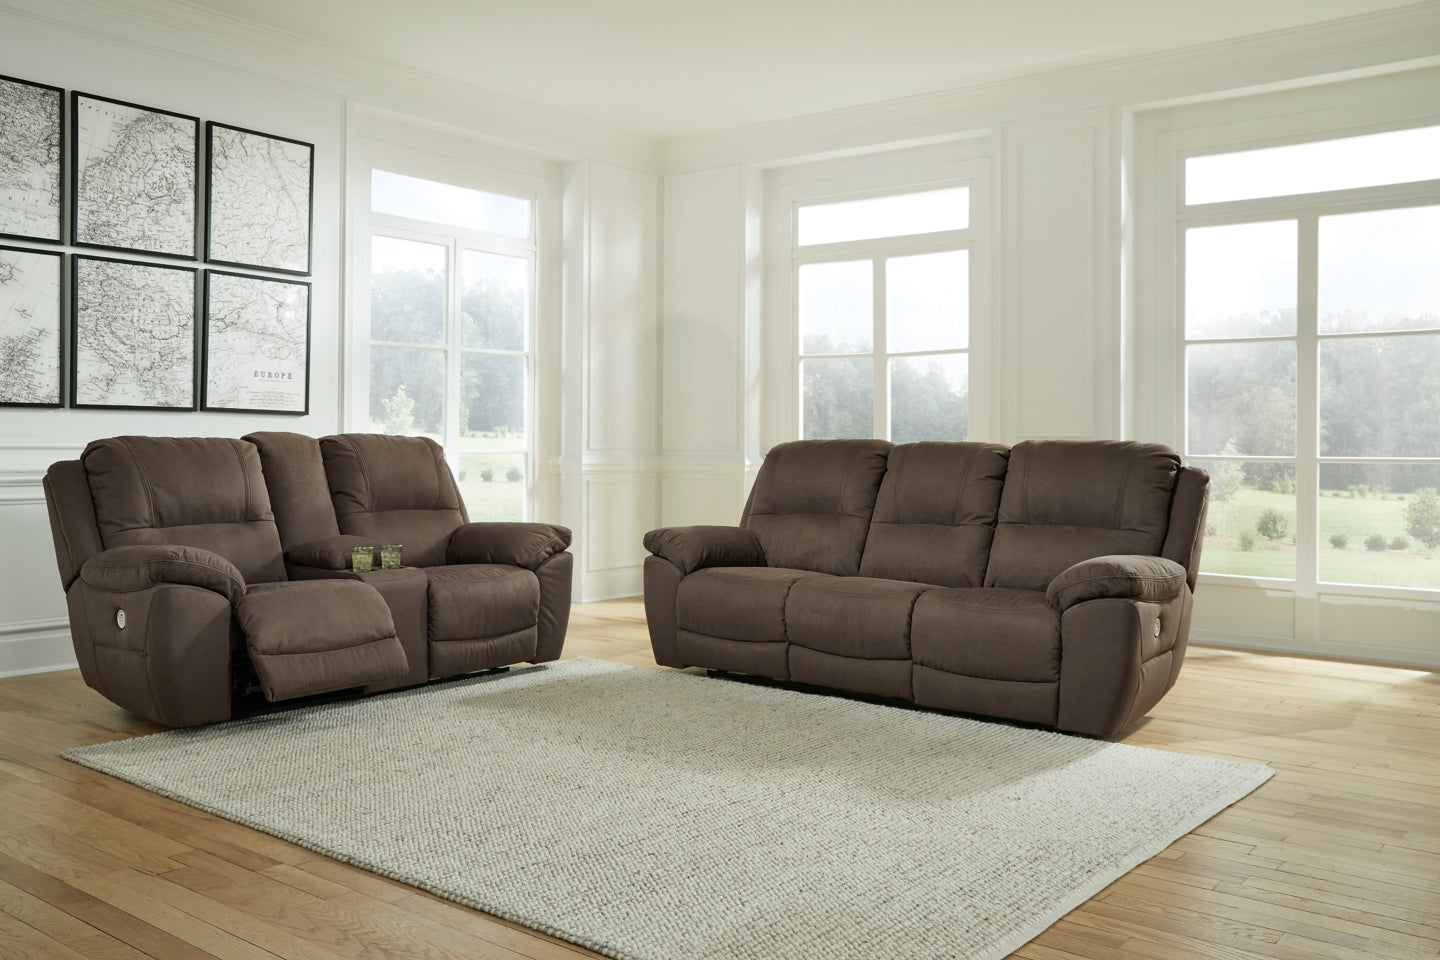 Next-Gen Gaucho Sofa and Loveseat - PKG013091 - furniture place usa